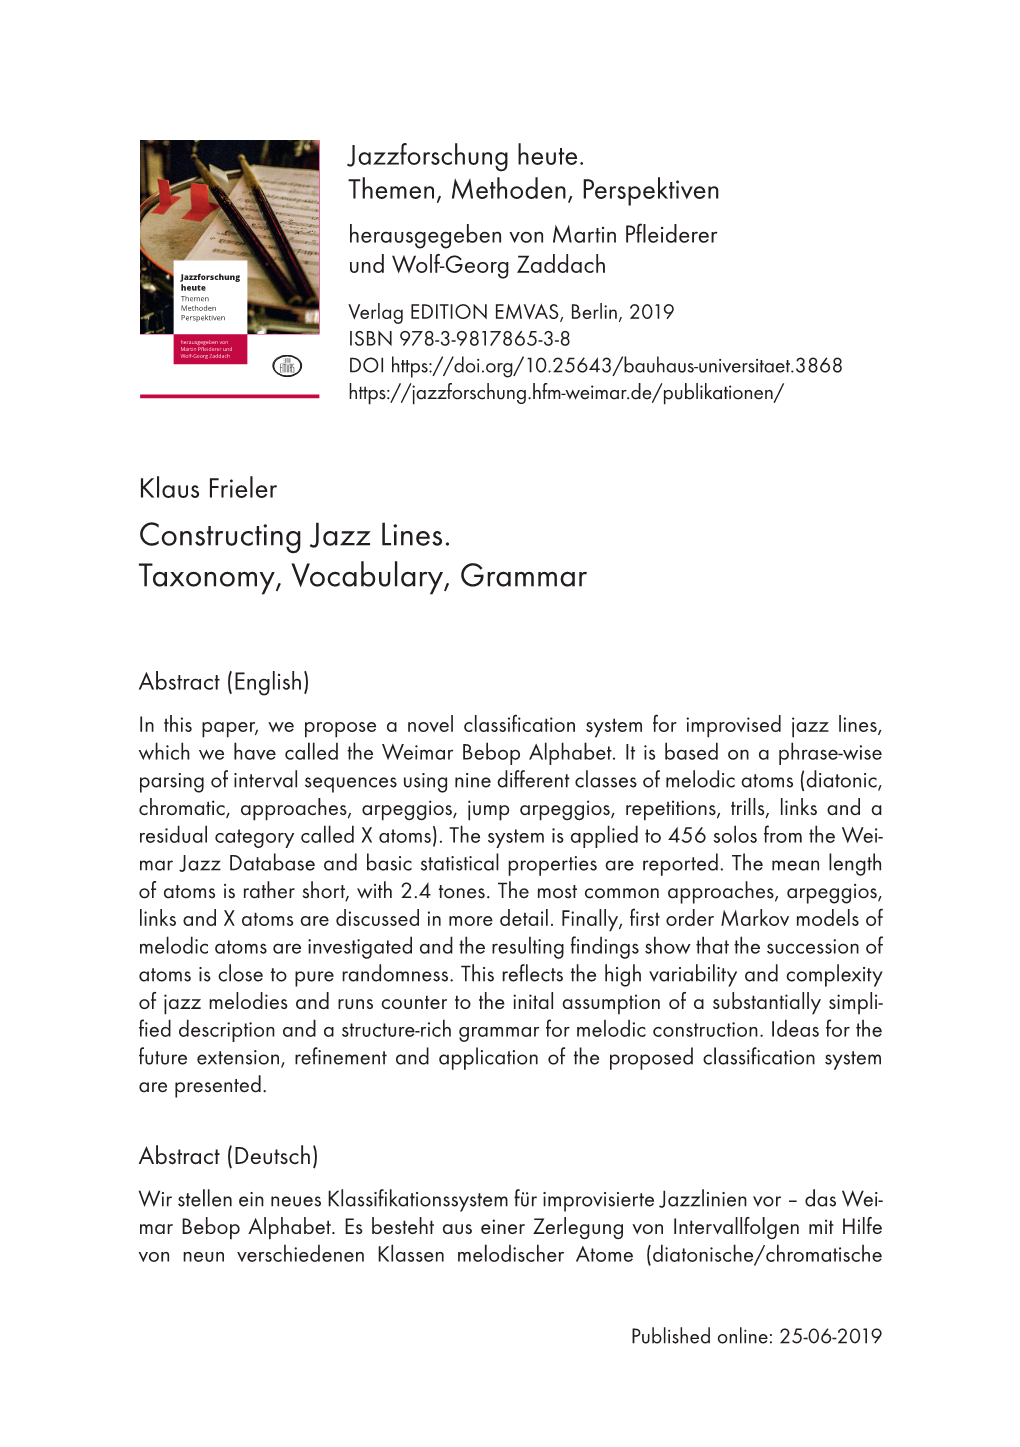 Constructing Jazz Lines. Taxonomy, Vocabulary, Grammar